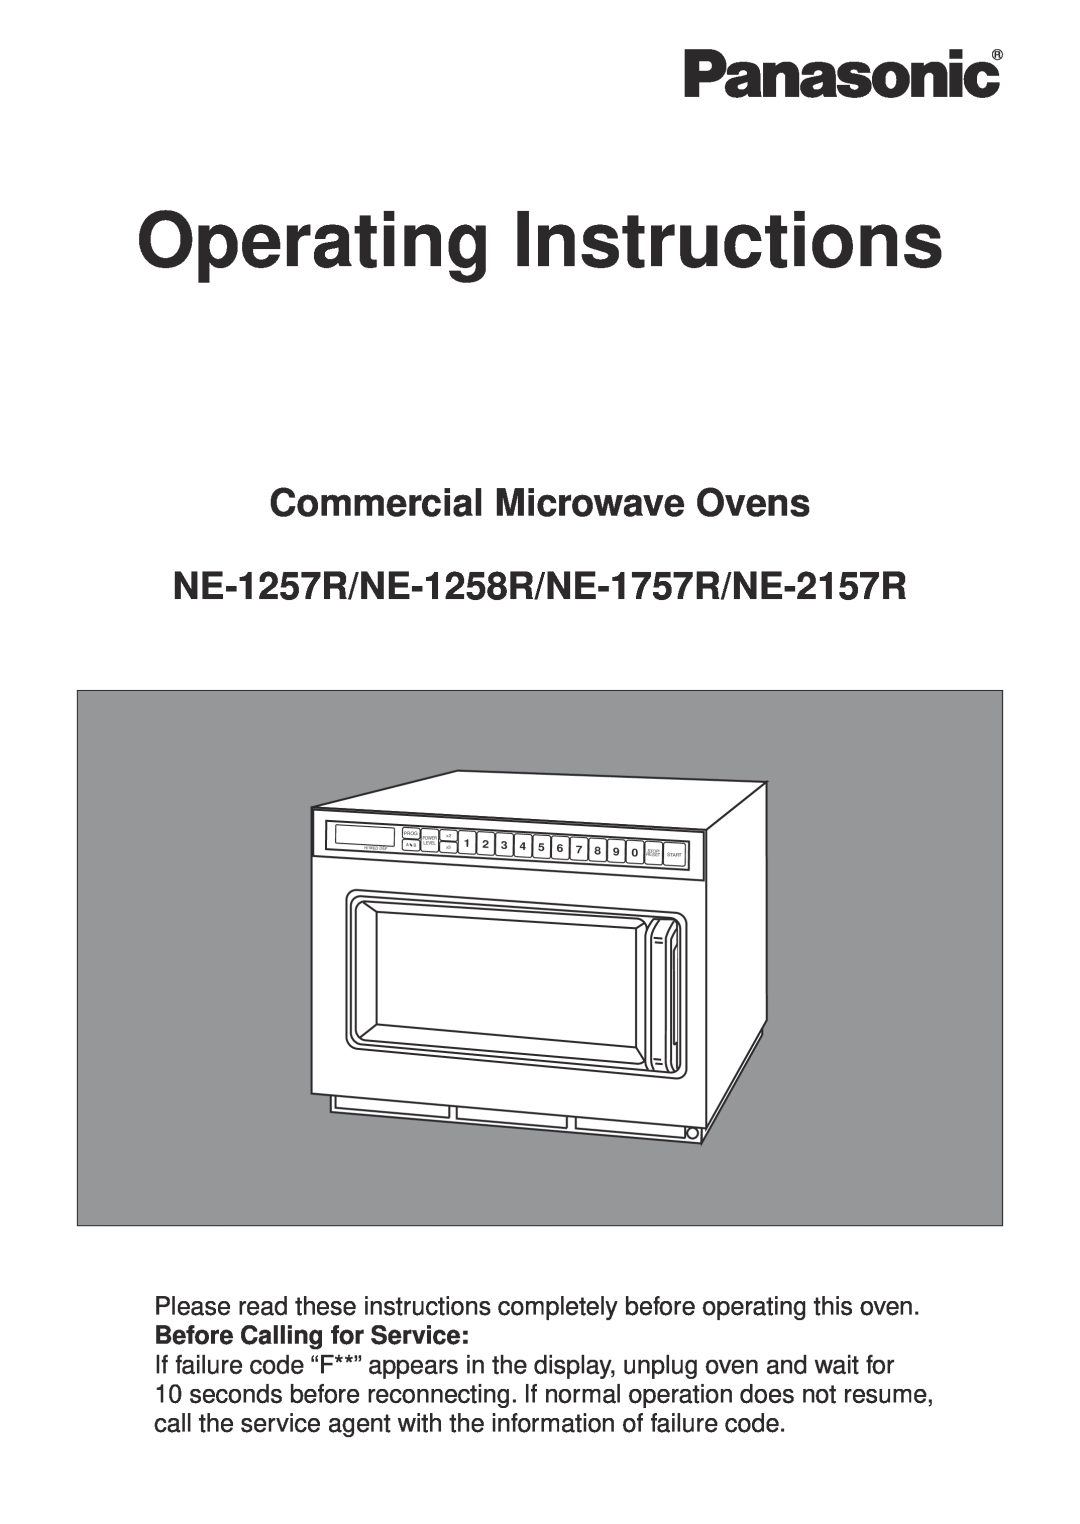 Panasonic NE1757R operating instructions Before Calling for Service, Operating Instructions, Commercial Microwave Ovens 